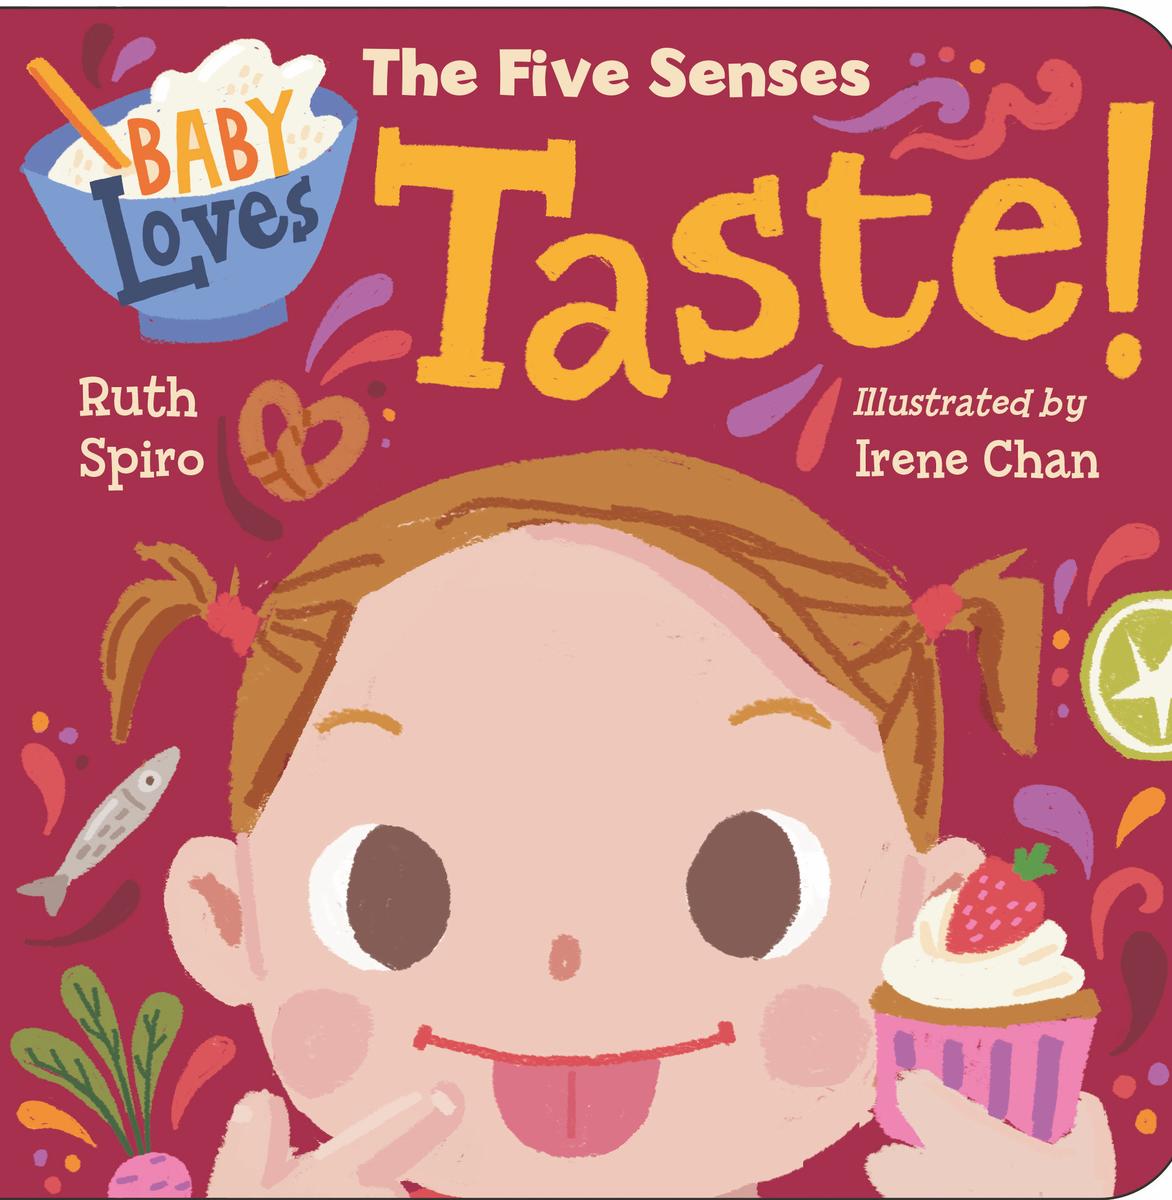 Baby Loves the Five Senses: Taste!  ( BABY LOVES SCIENCE series)